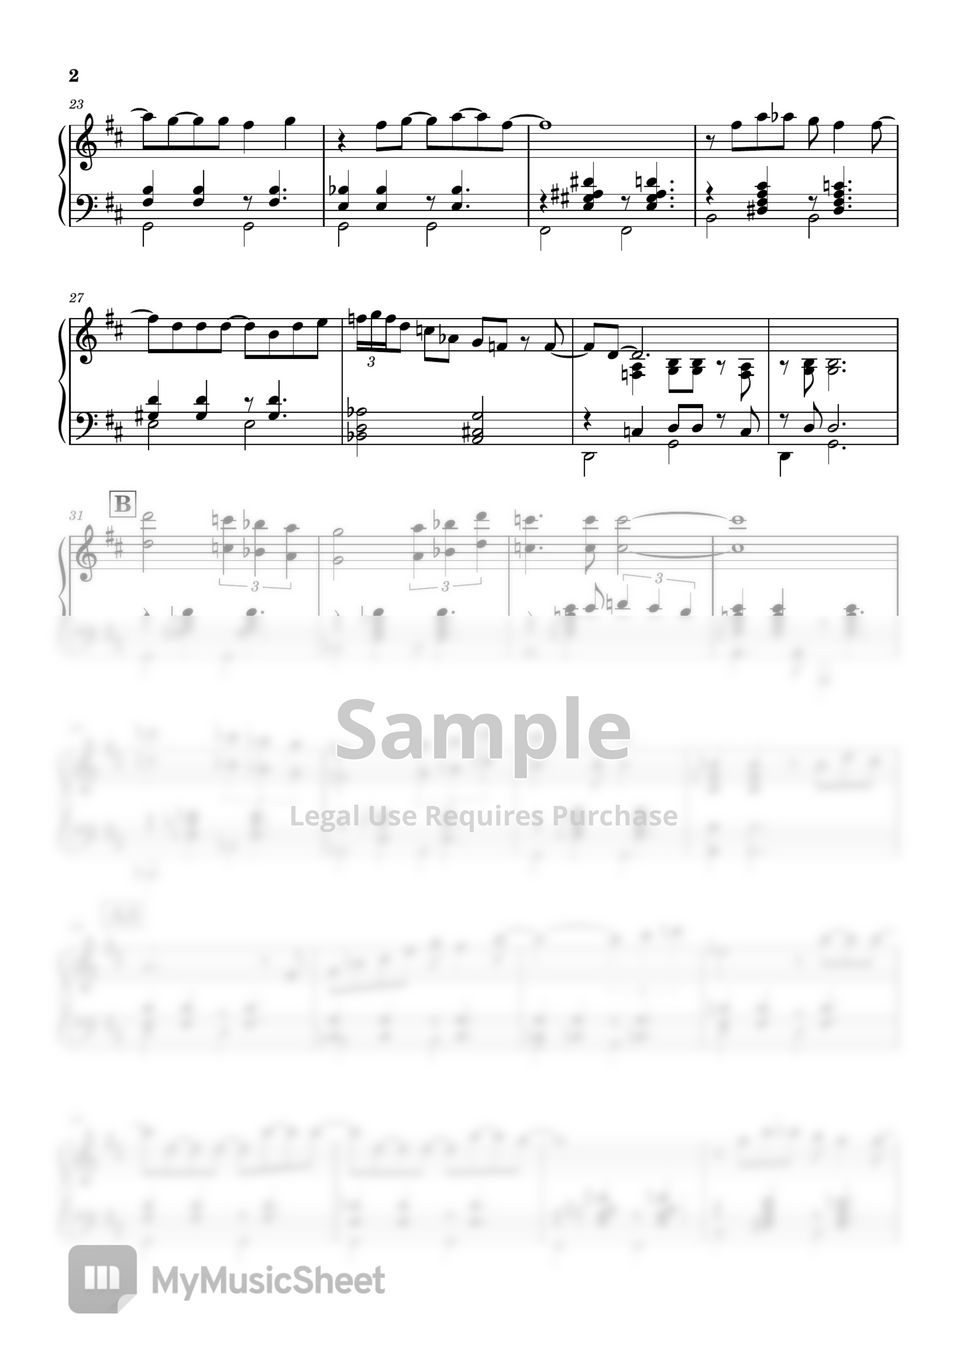 A.Jobim - Wave Bossa Nova Piano Solo (Bossa Nova Piano Arrangement) by Koala Piano